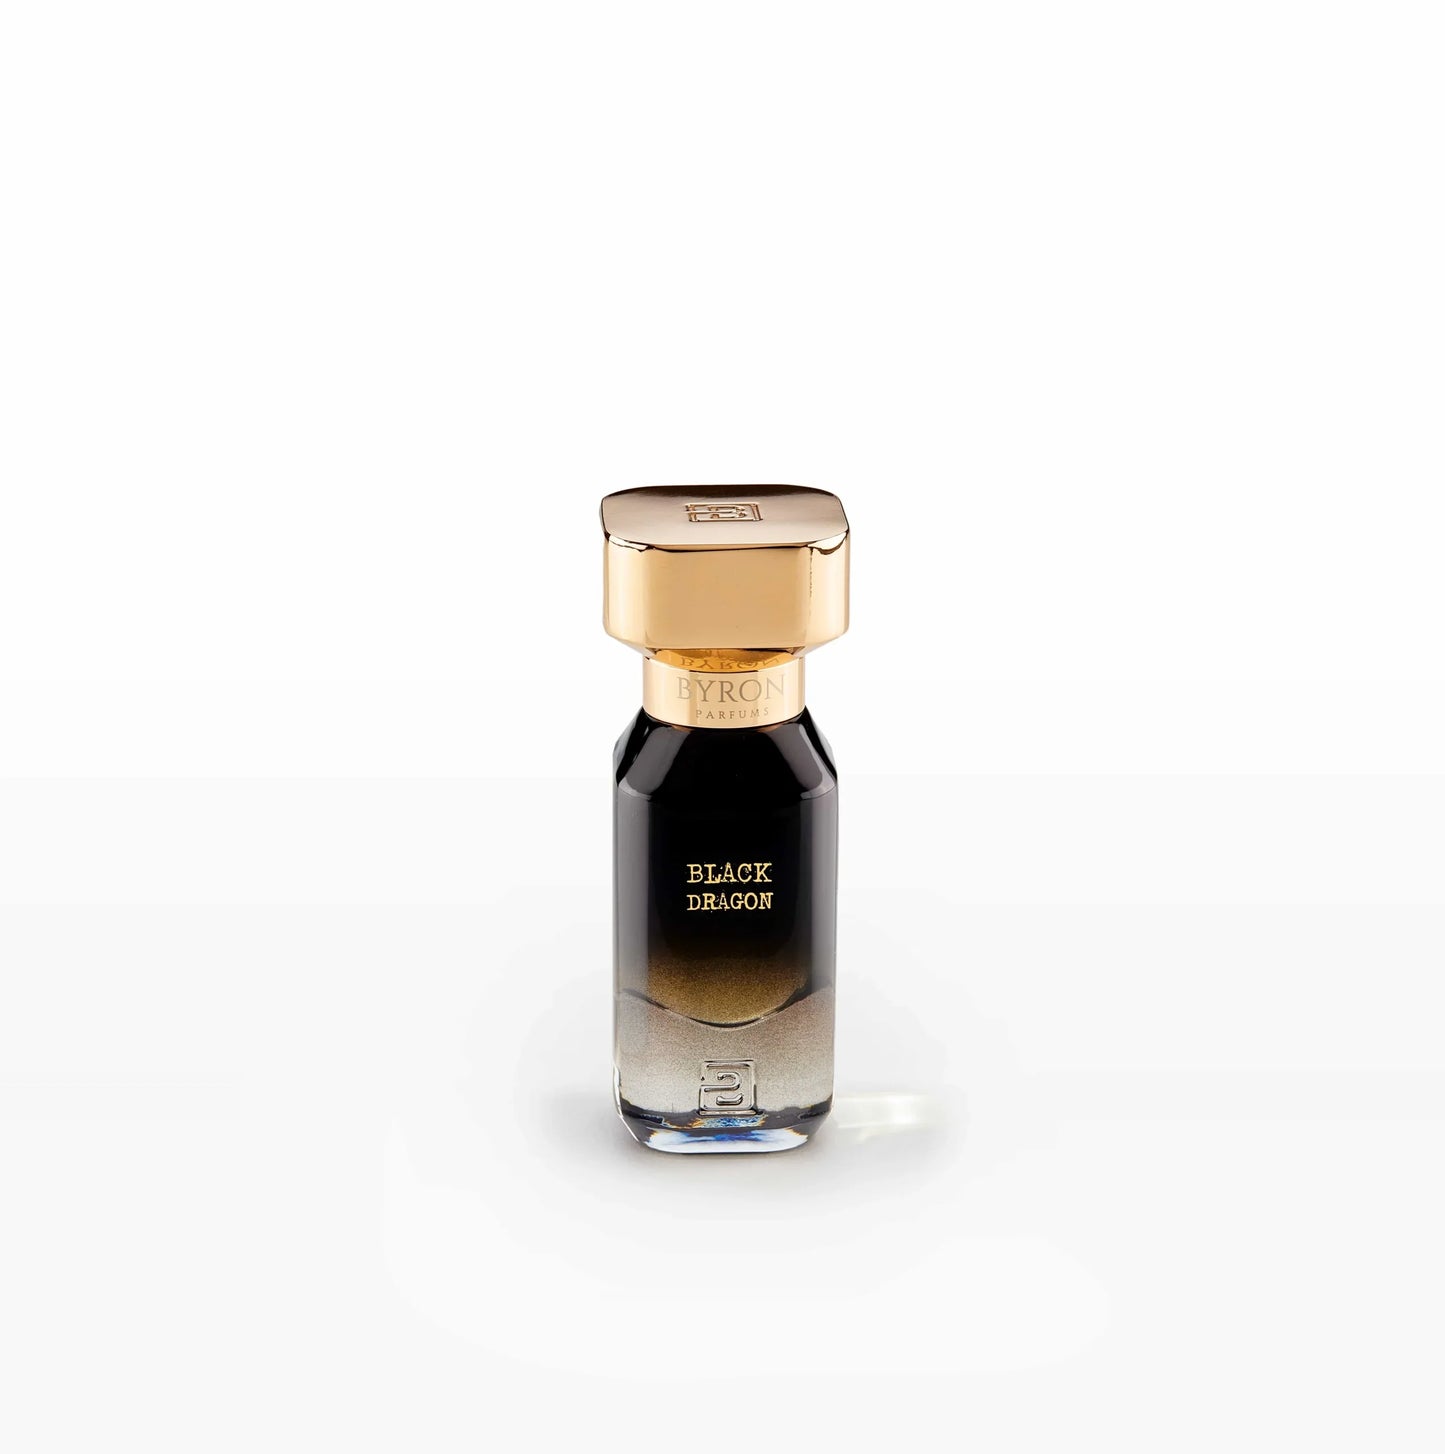 Black Dragon Byron Parfums Sample 2ml